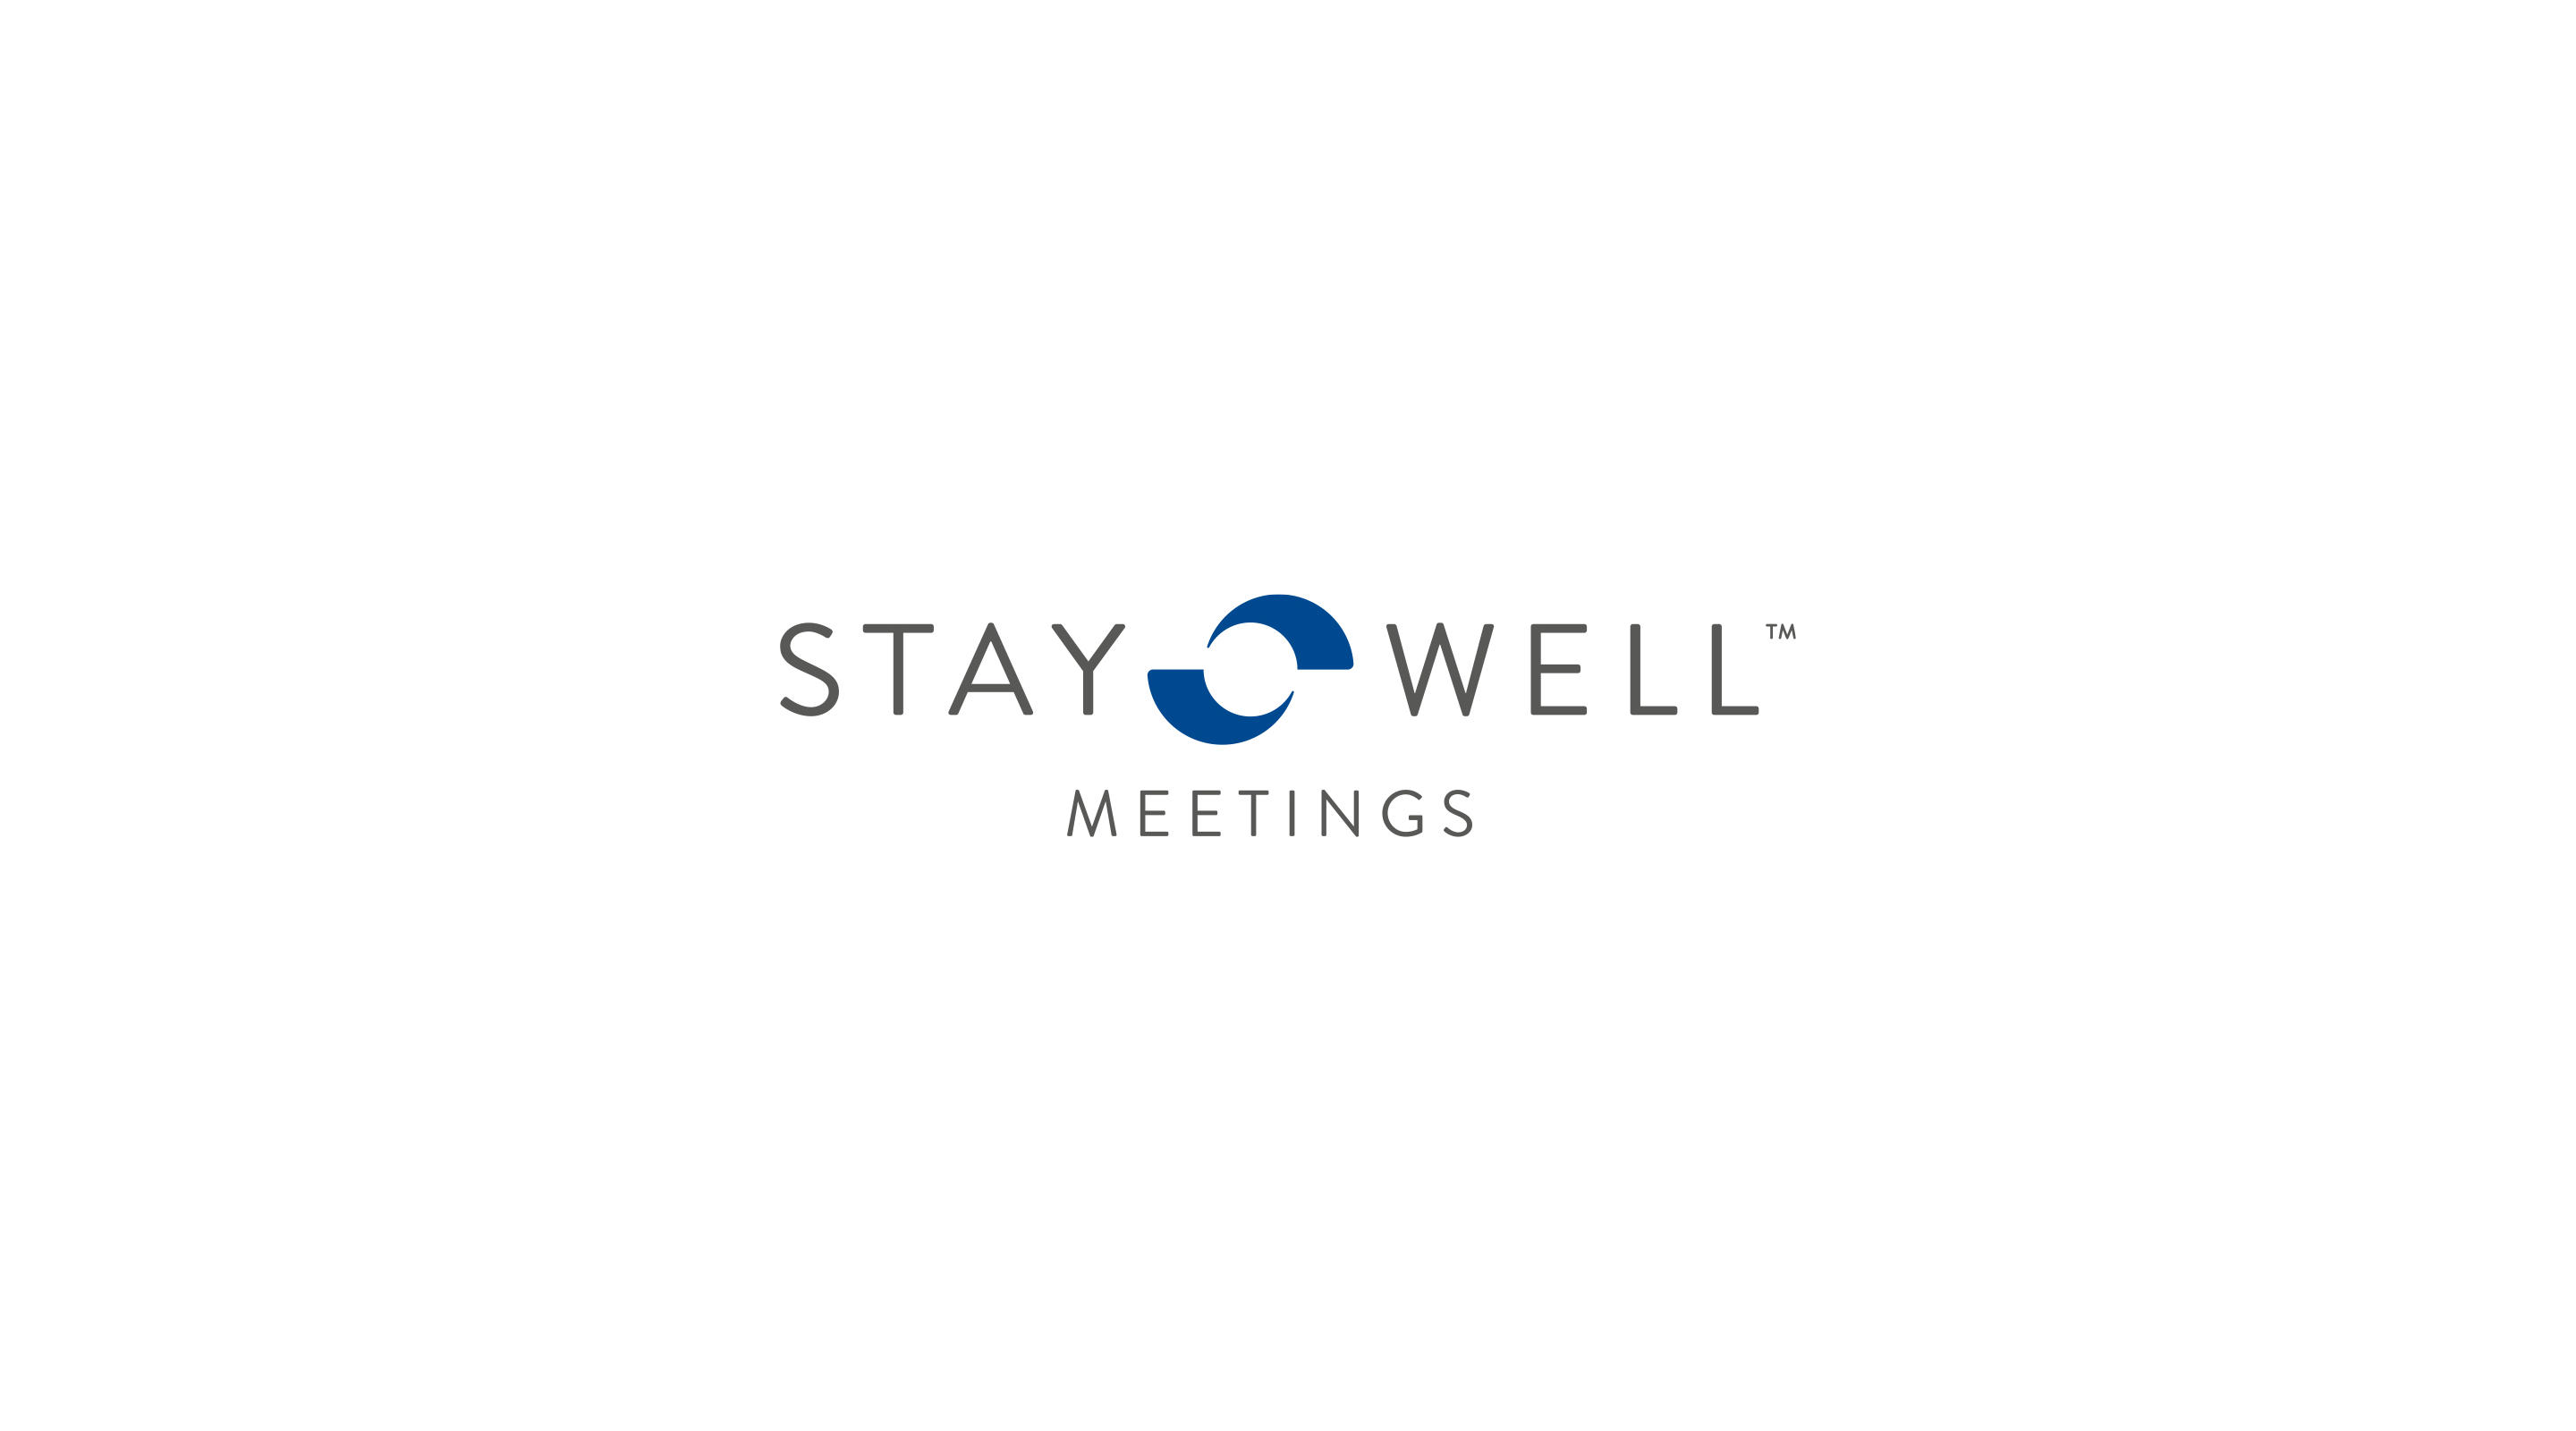 mgm-resorts-meetings-stay-well-meetings-logo